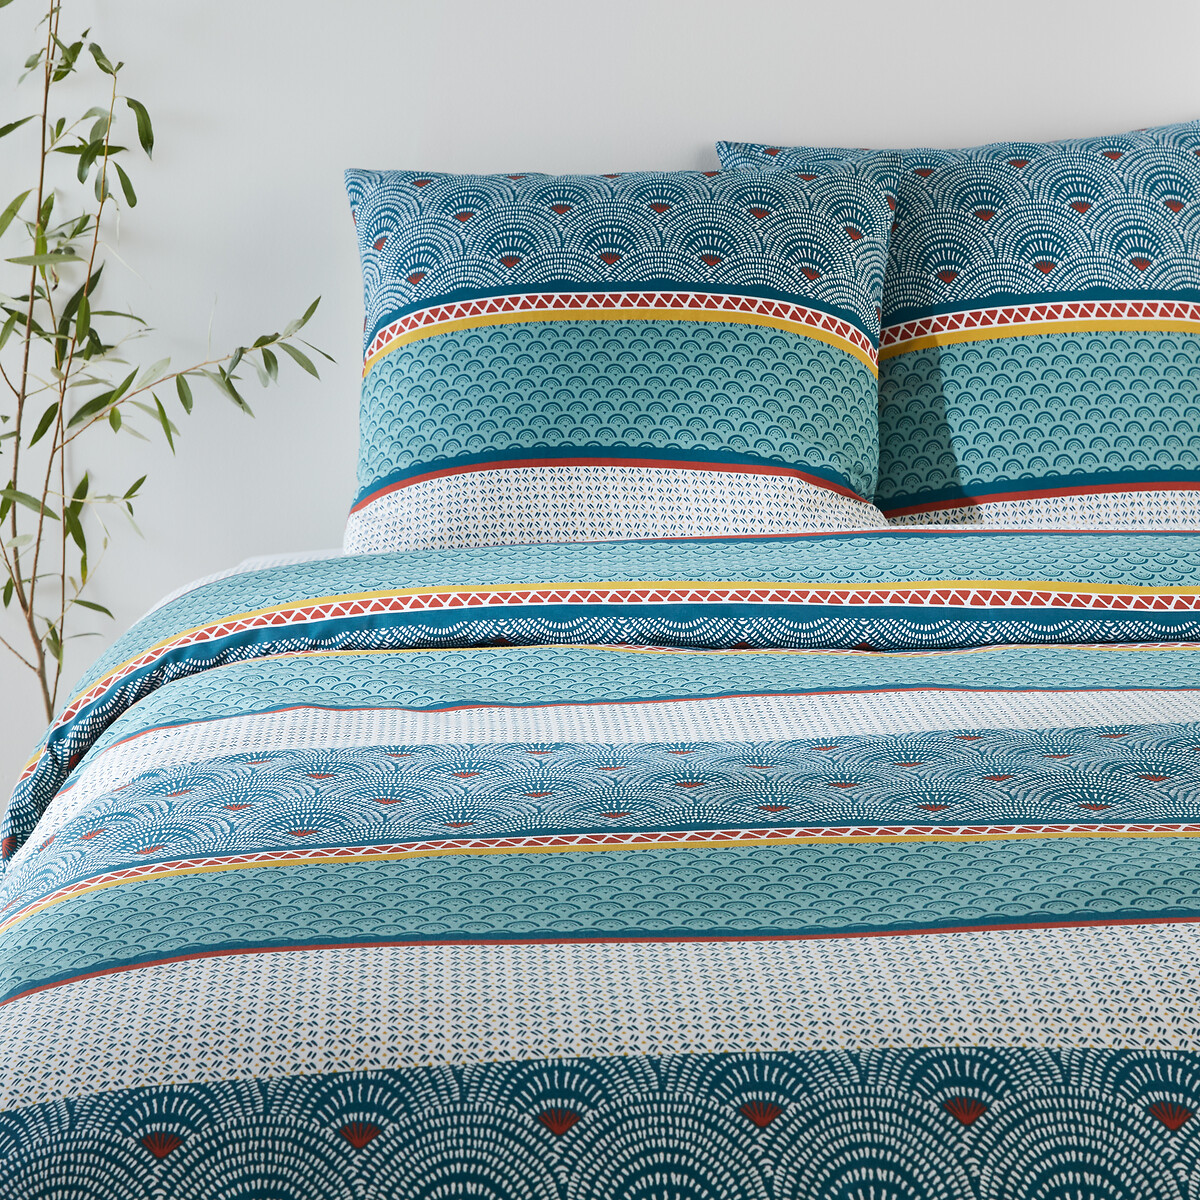 Napo Graphic 100% Cotton Bedding Set with Square Pillowcase